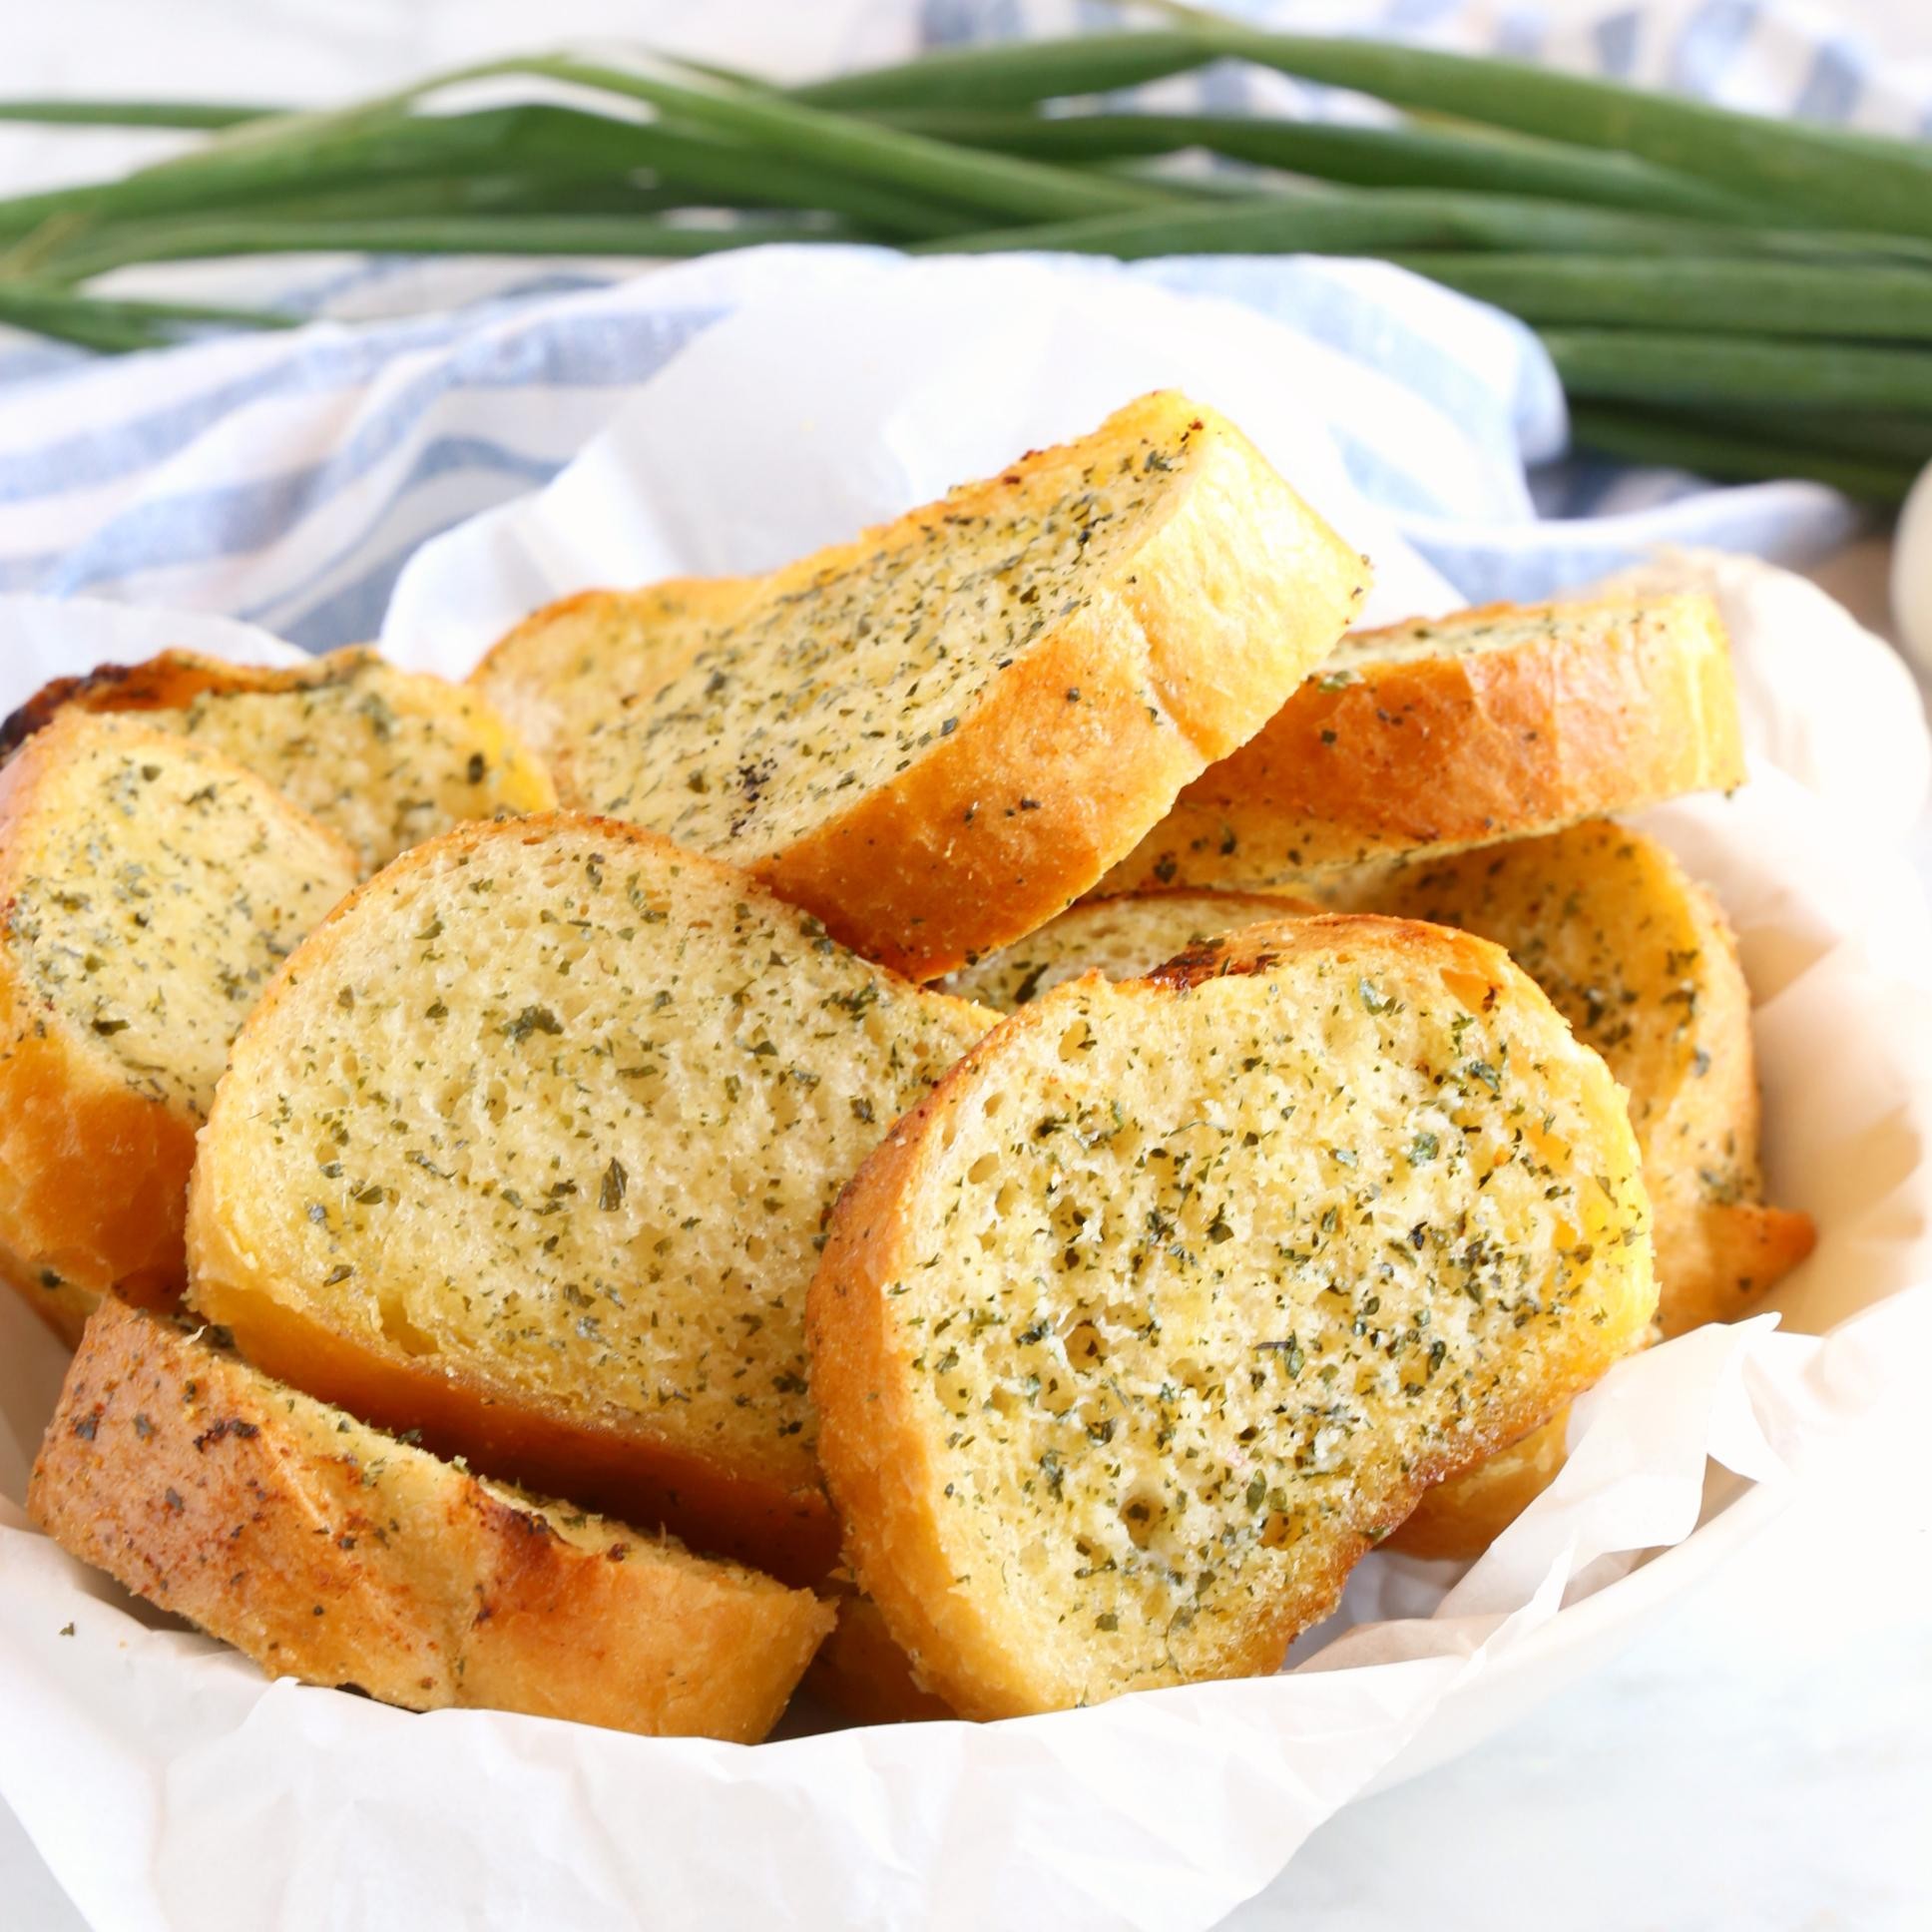 1- Extra Garlic Bread